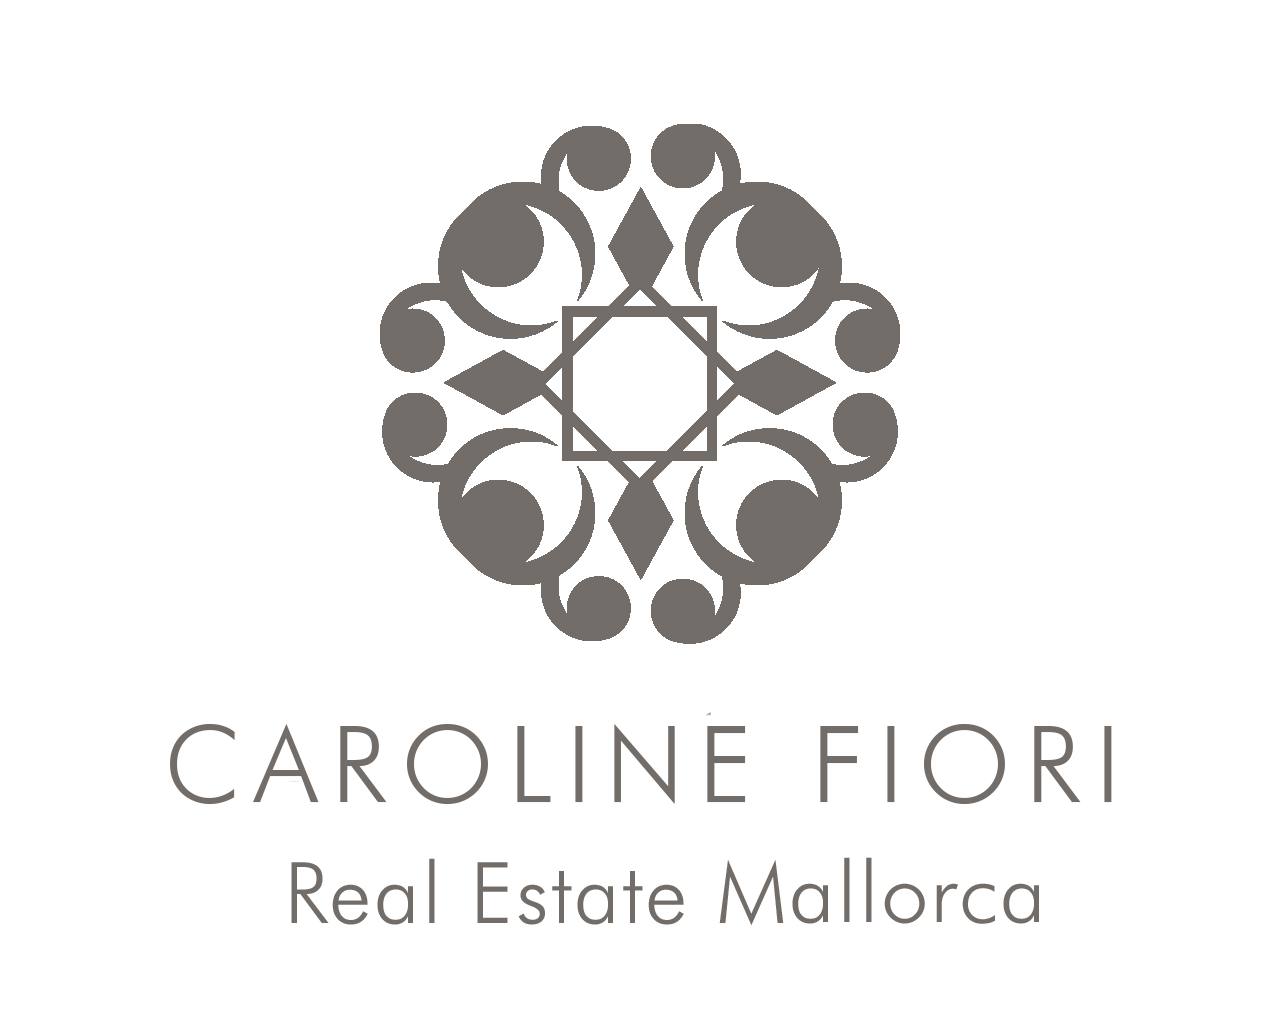 CAROLINE FIORI Real Estate